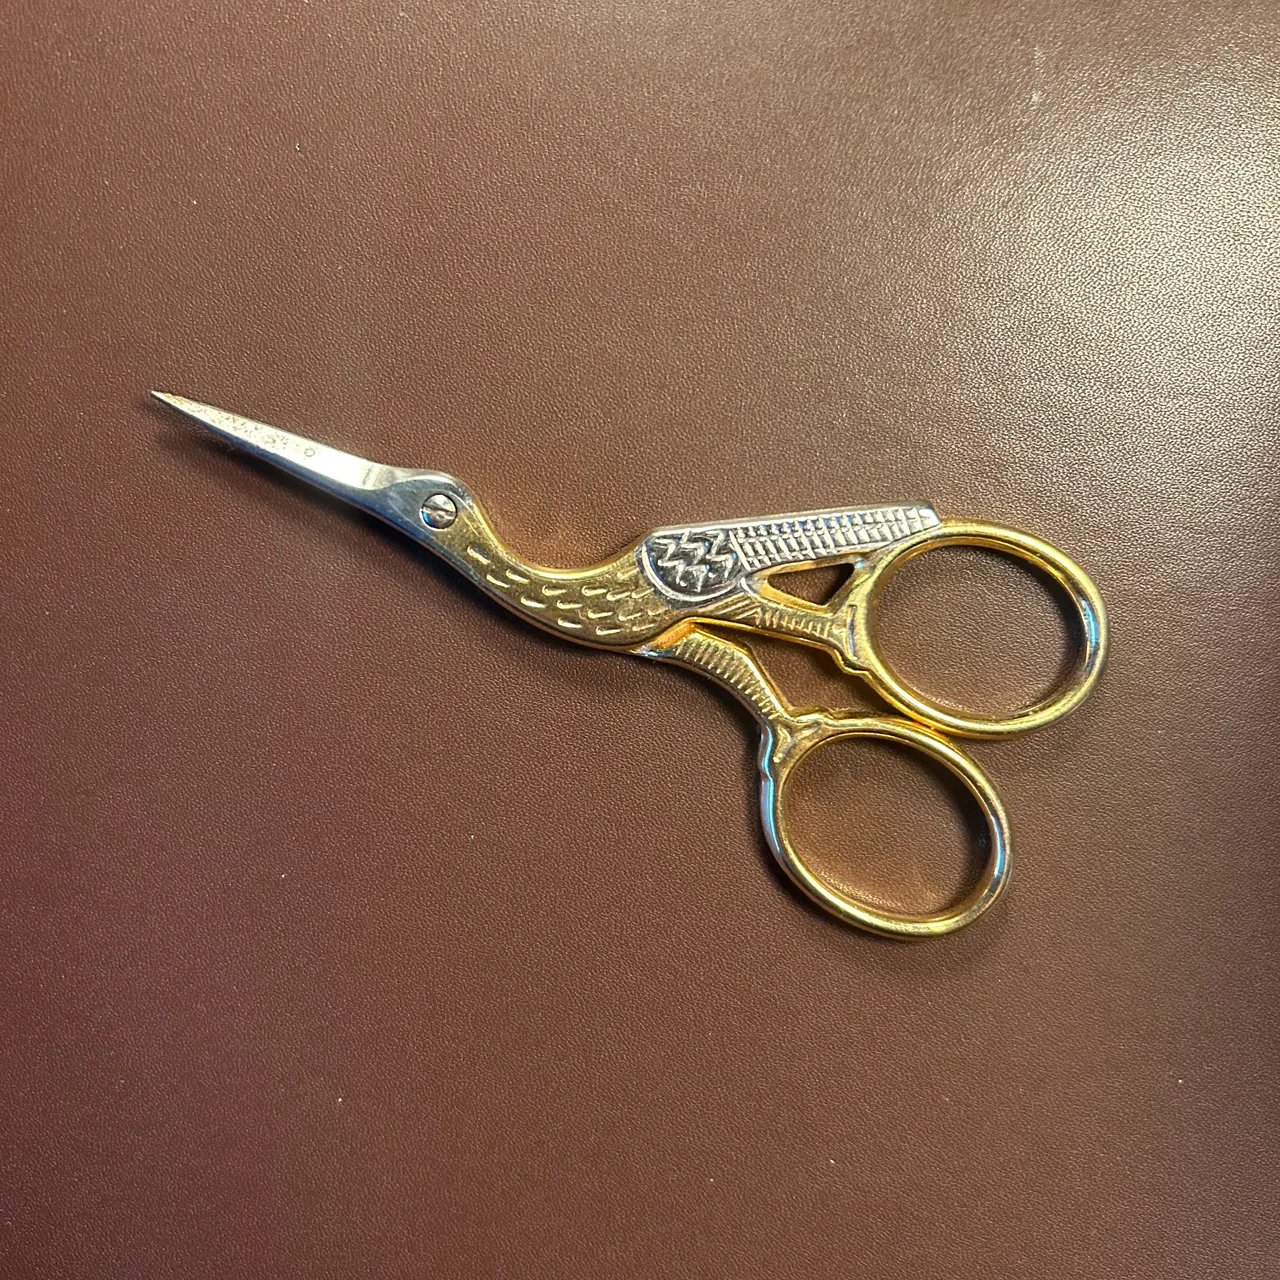 Stork sewing scissors - 3.5 inch photo 1